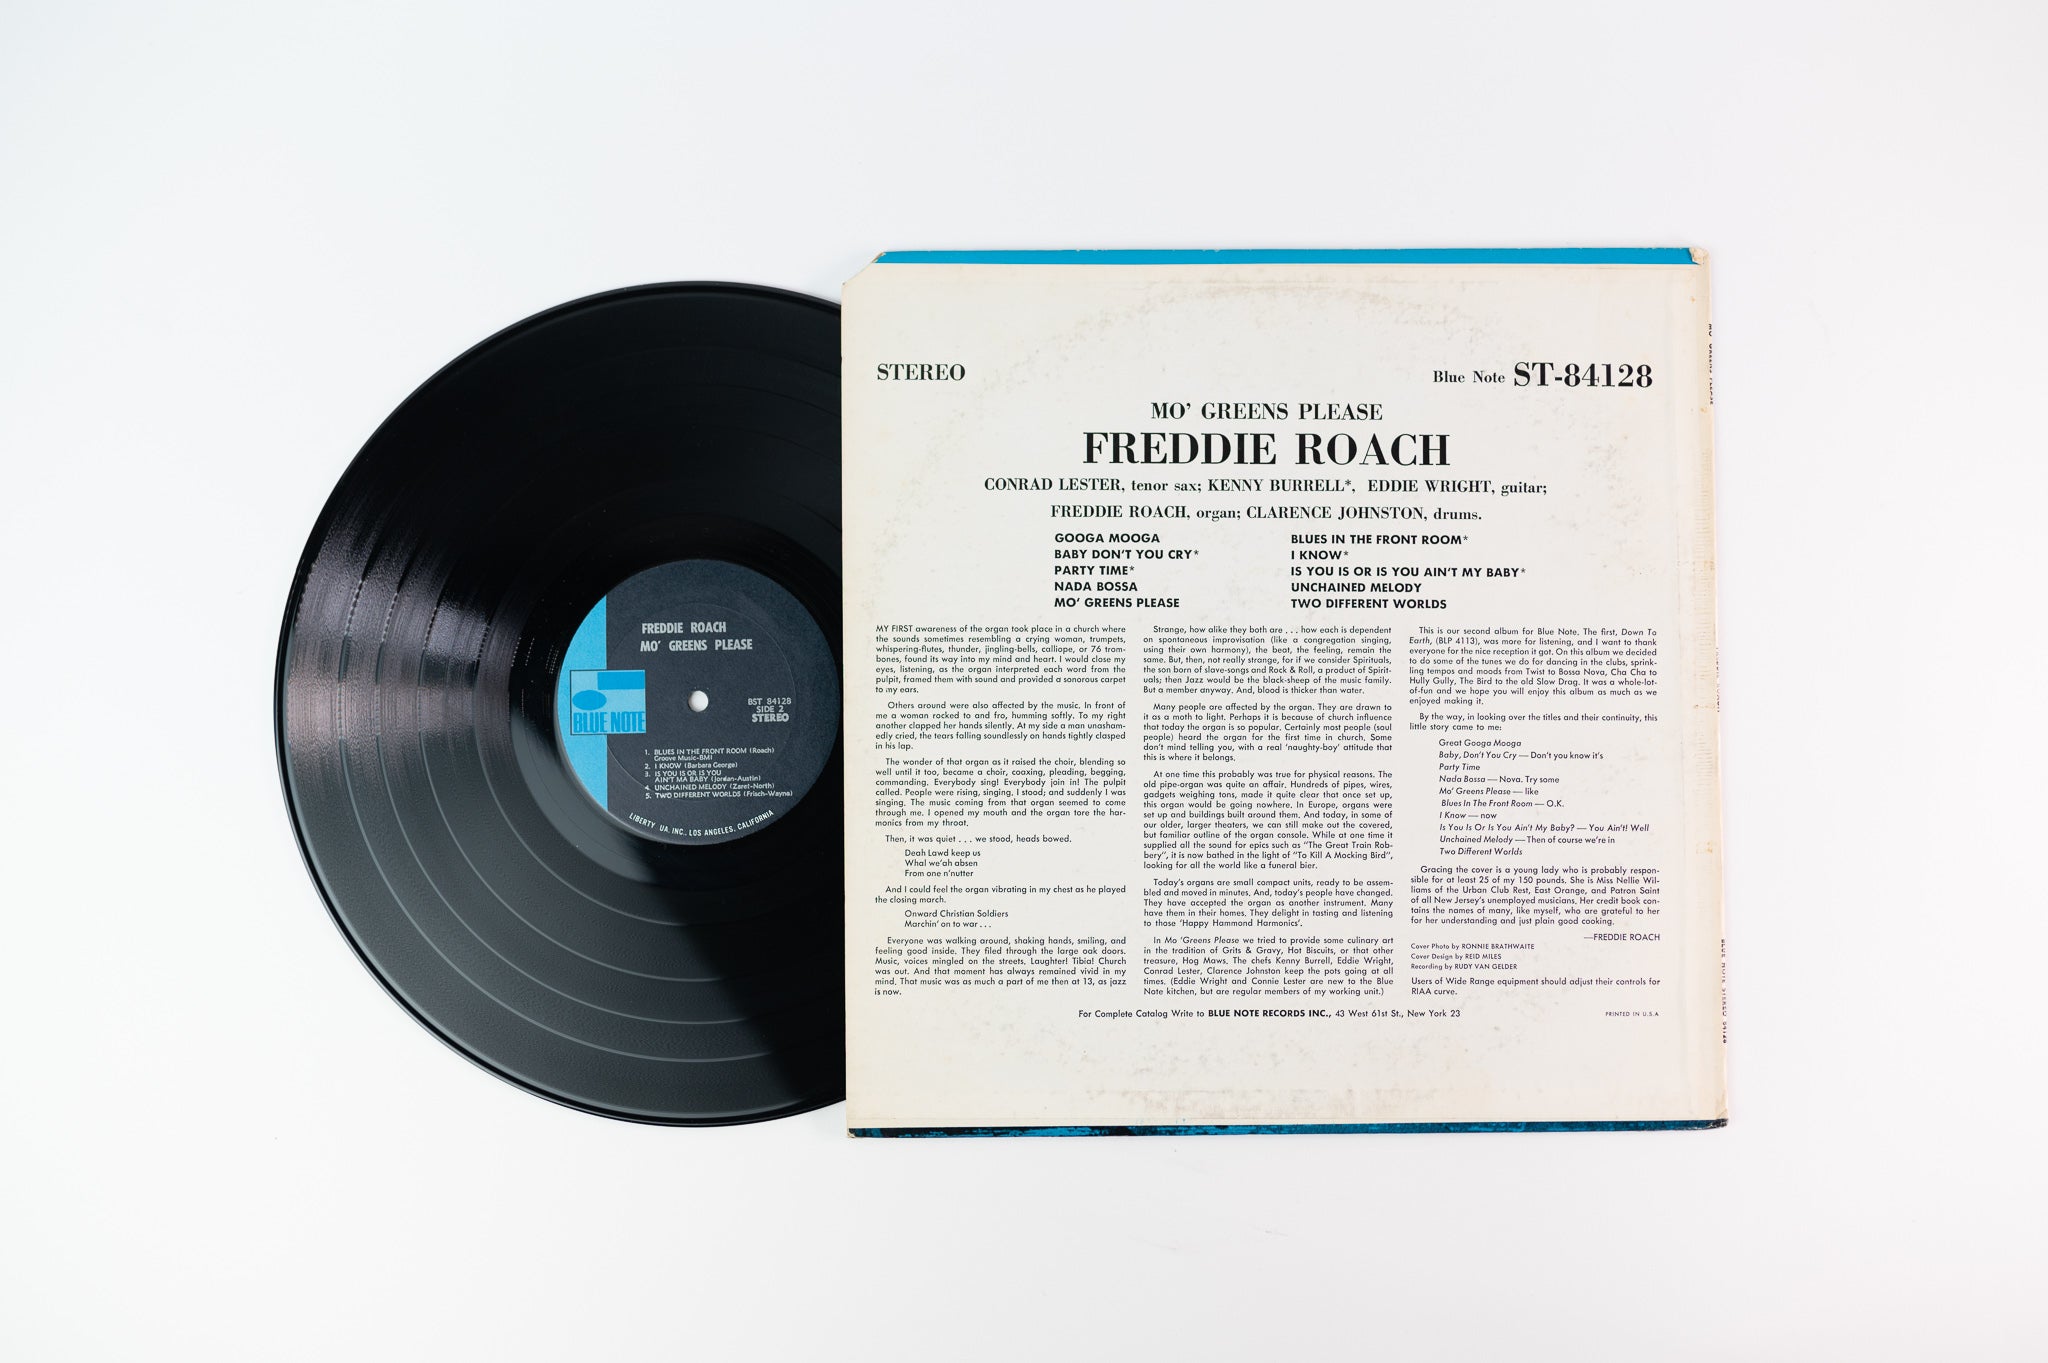 Freddie Roach - Mo' Greens Please on Blue Note BST 84128